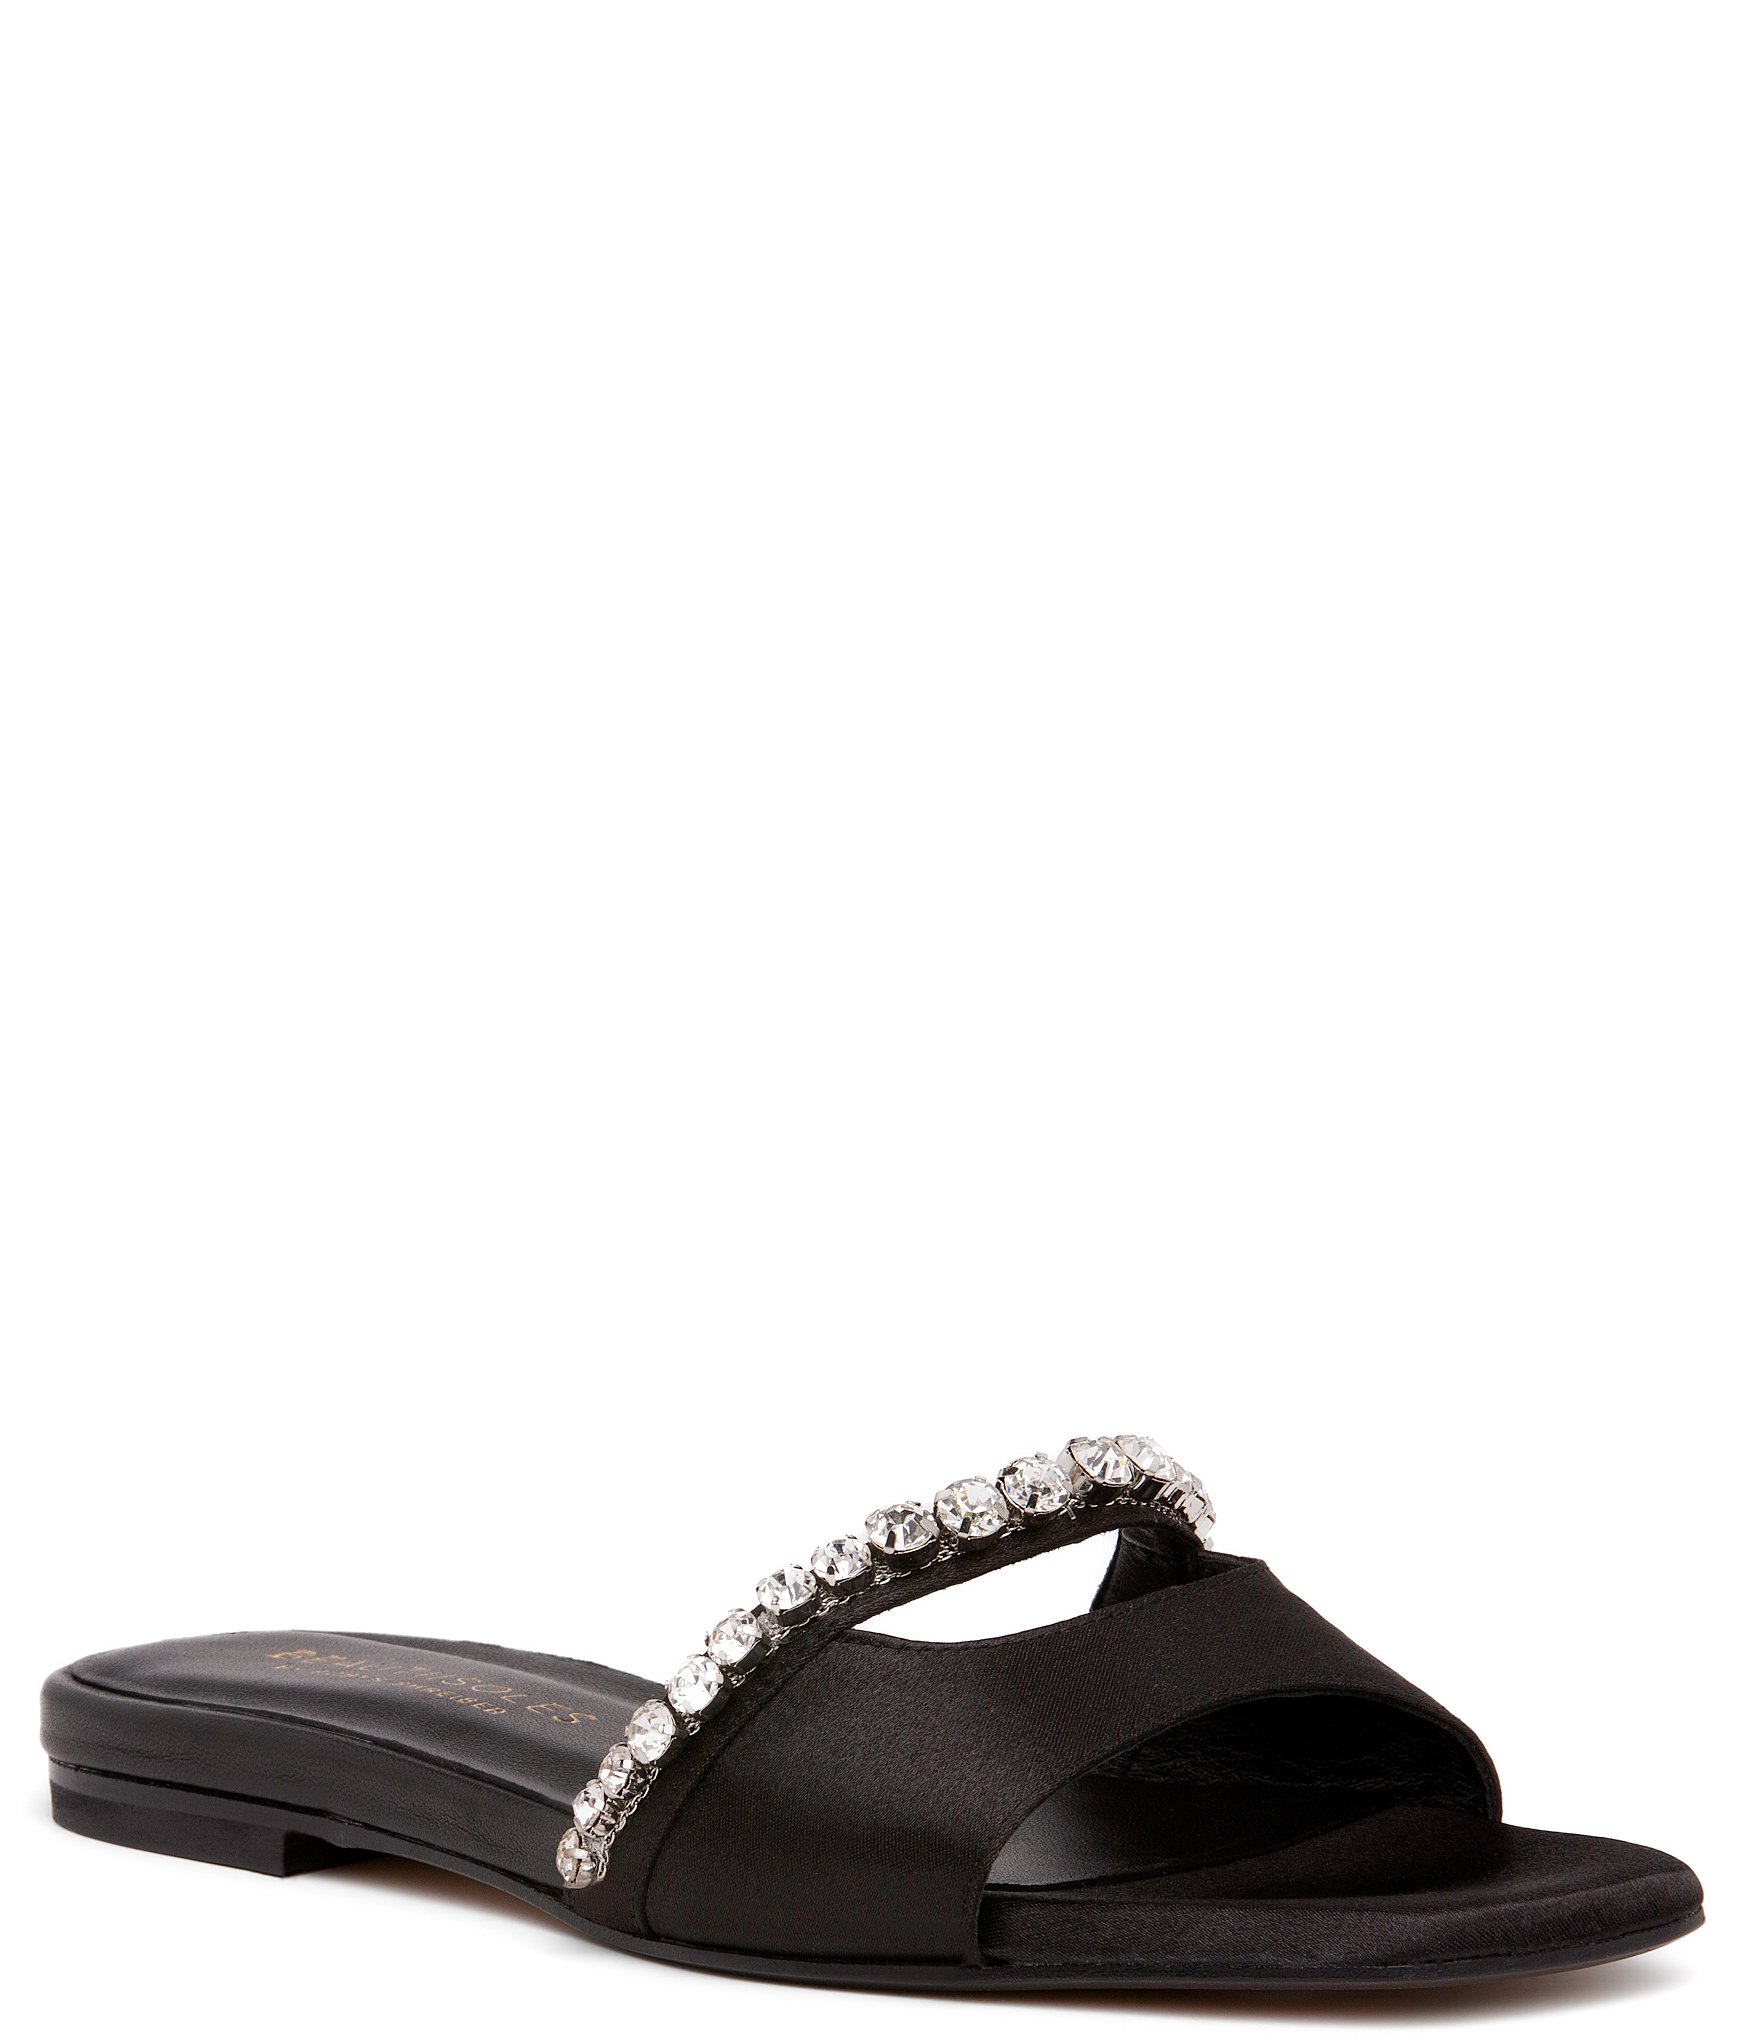 BEAUTIISOLES Gemma Satin Rhinestone Embellished Slide Sandals | Dillard's